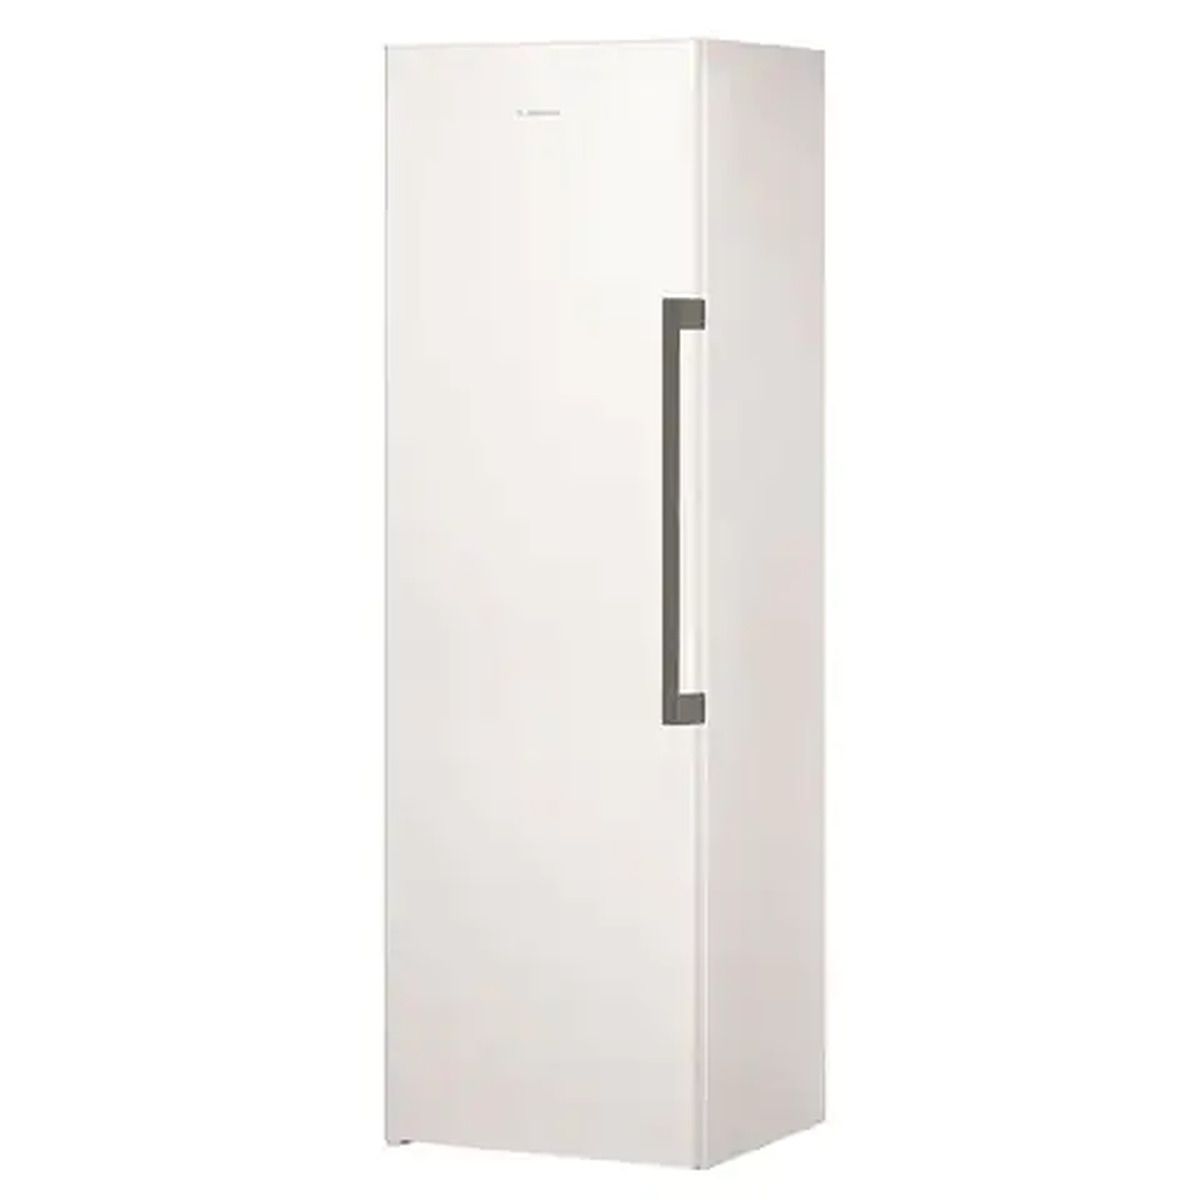 Ariston Upright Freezer 290 Liters